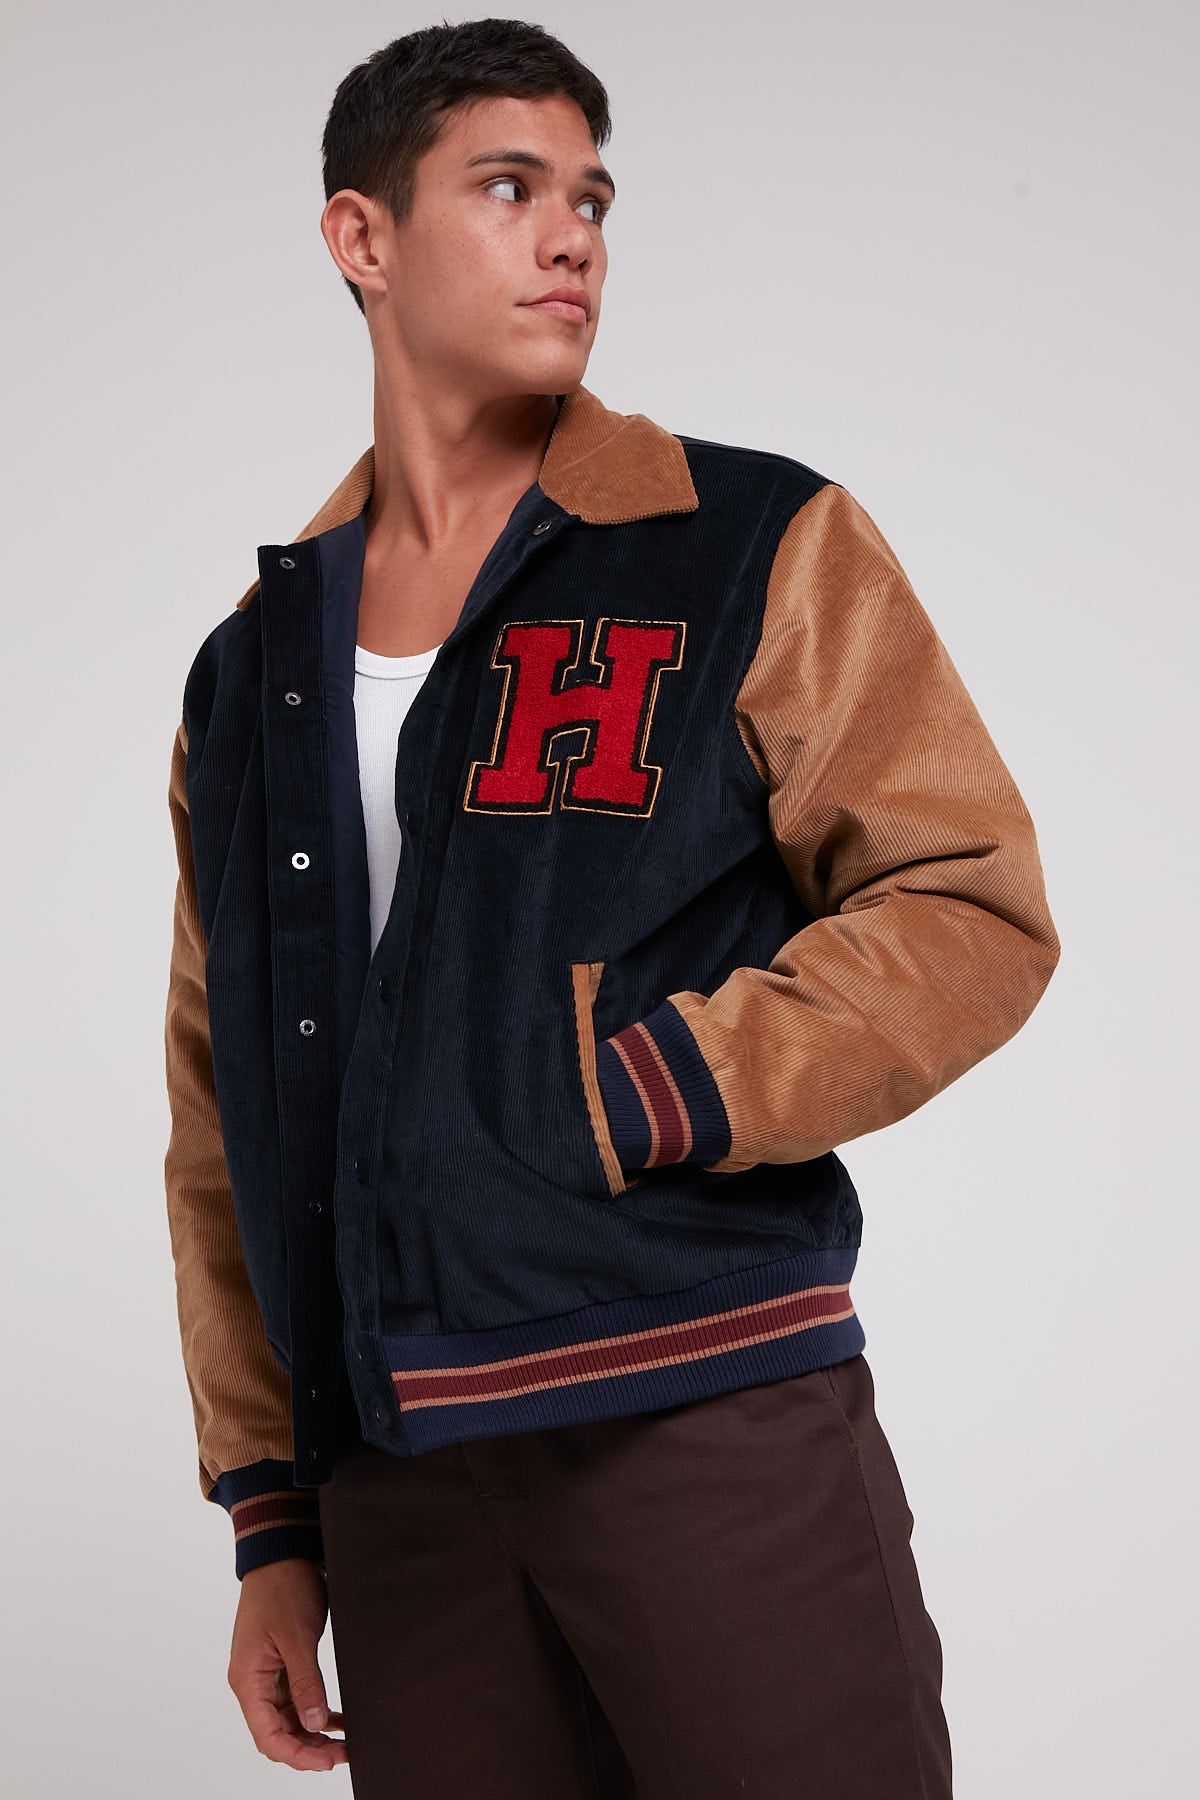 The New Establishment Harvard Pop Collar Two Tone Letterman Jacket Tan/Navy